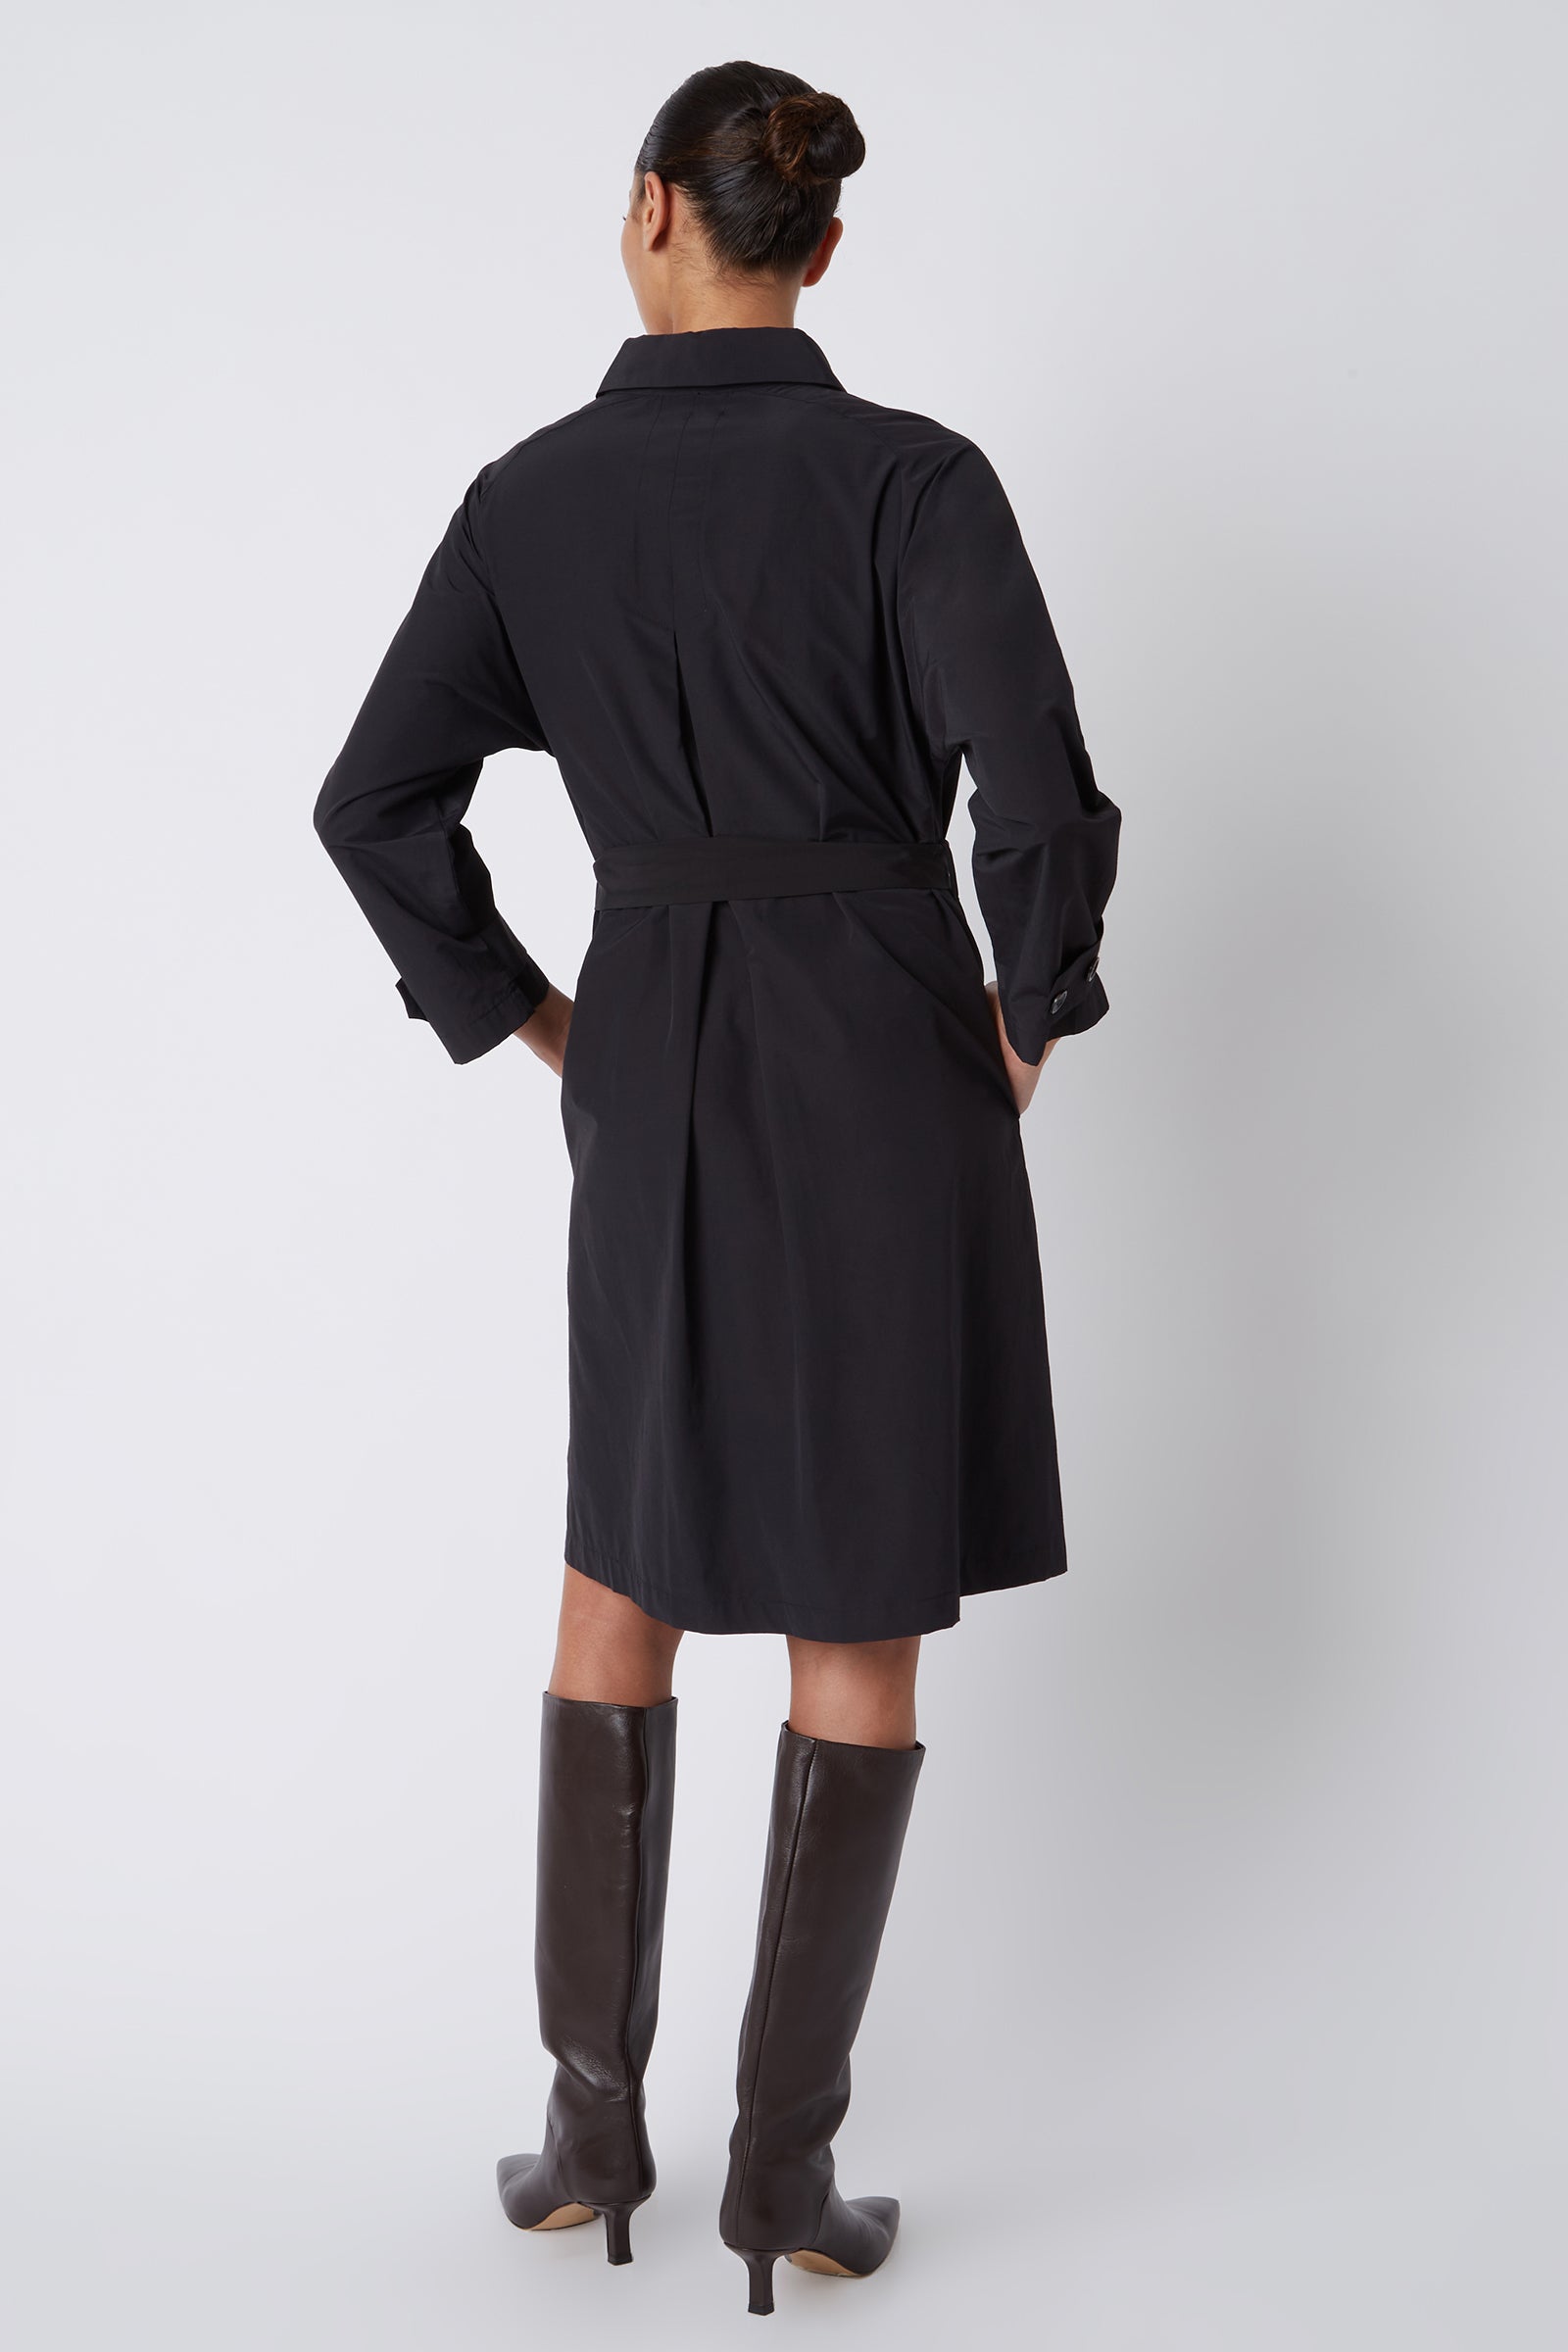 Kal Rieman Bonnie Pleat Back Dress in Black Italian Broadcloth on Model Main Full Front View